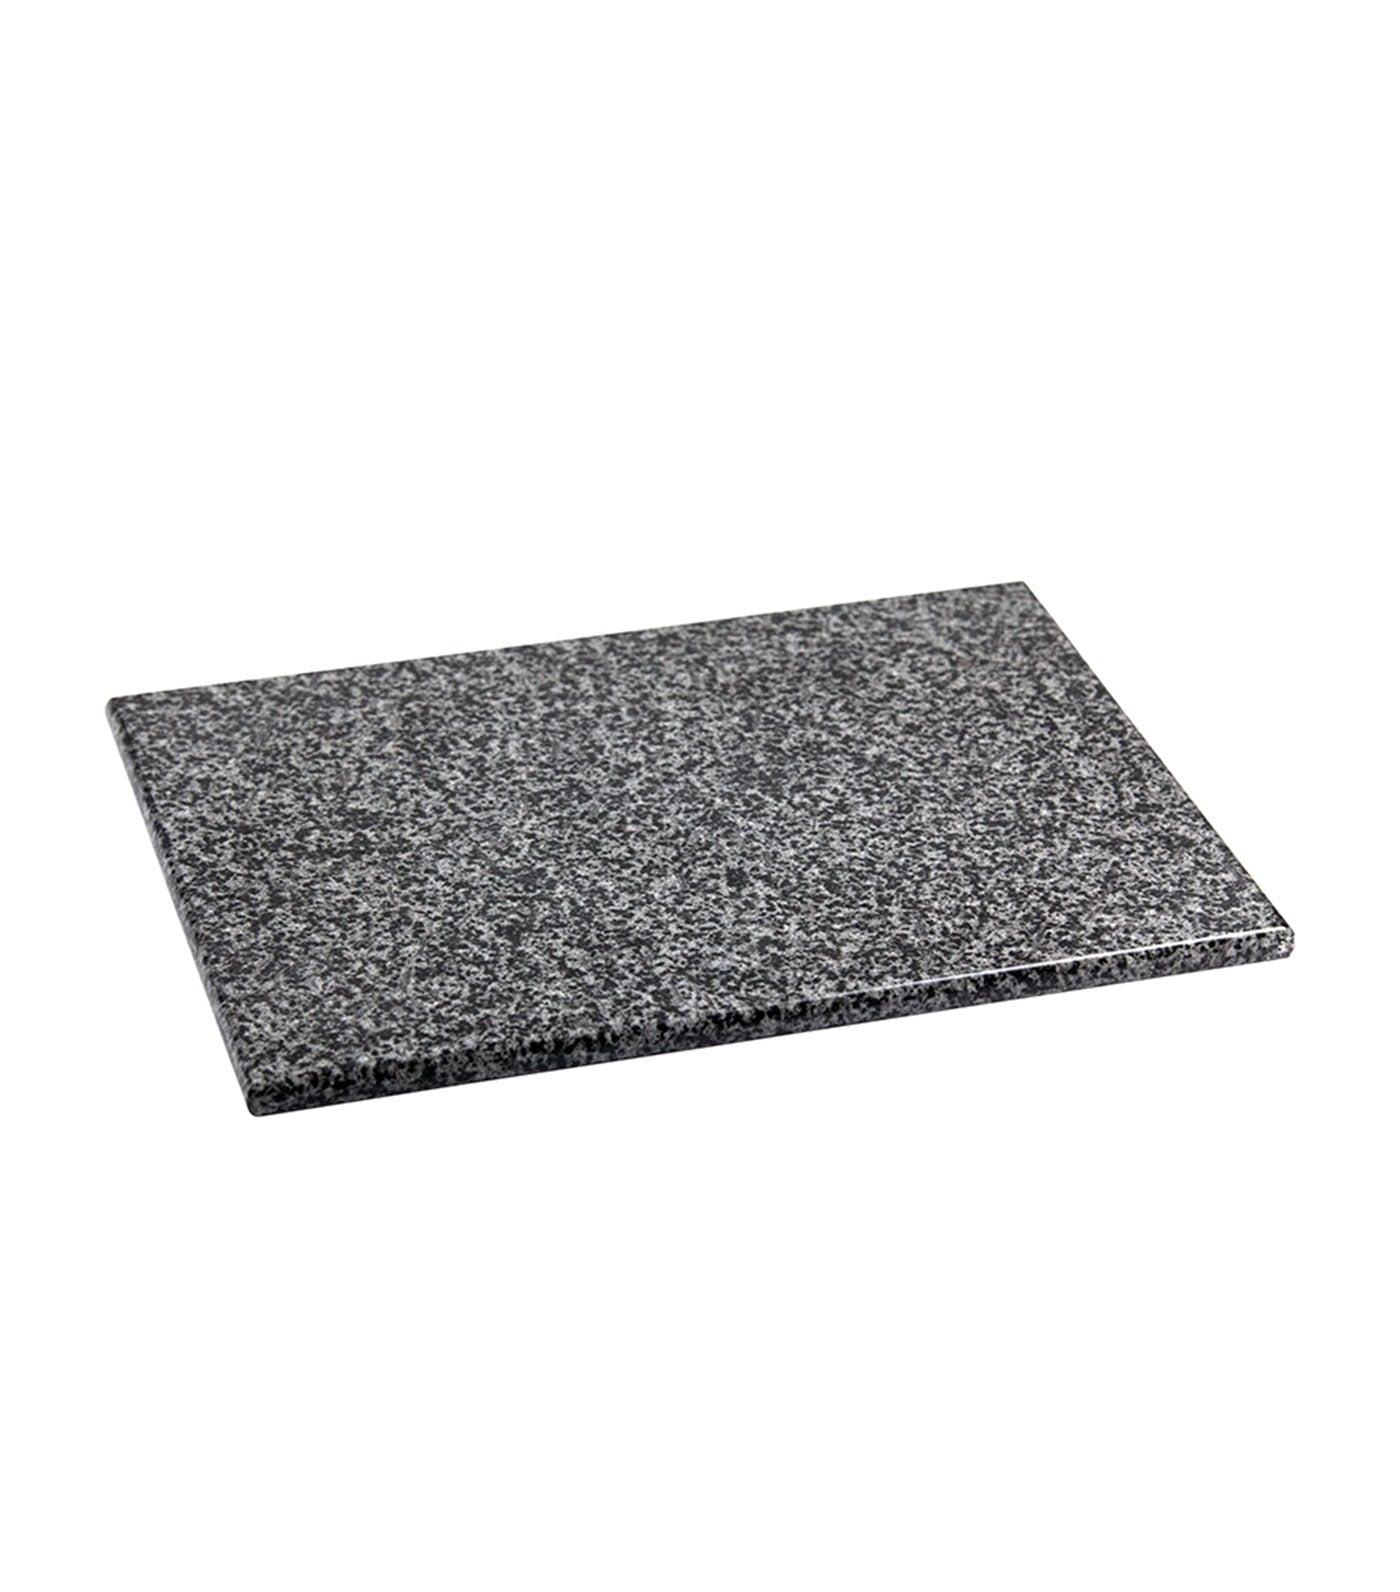 MakeRoom Granite Cutting Board